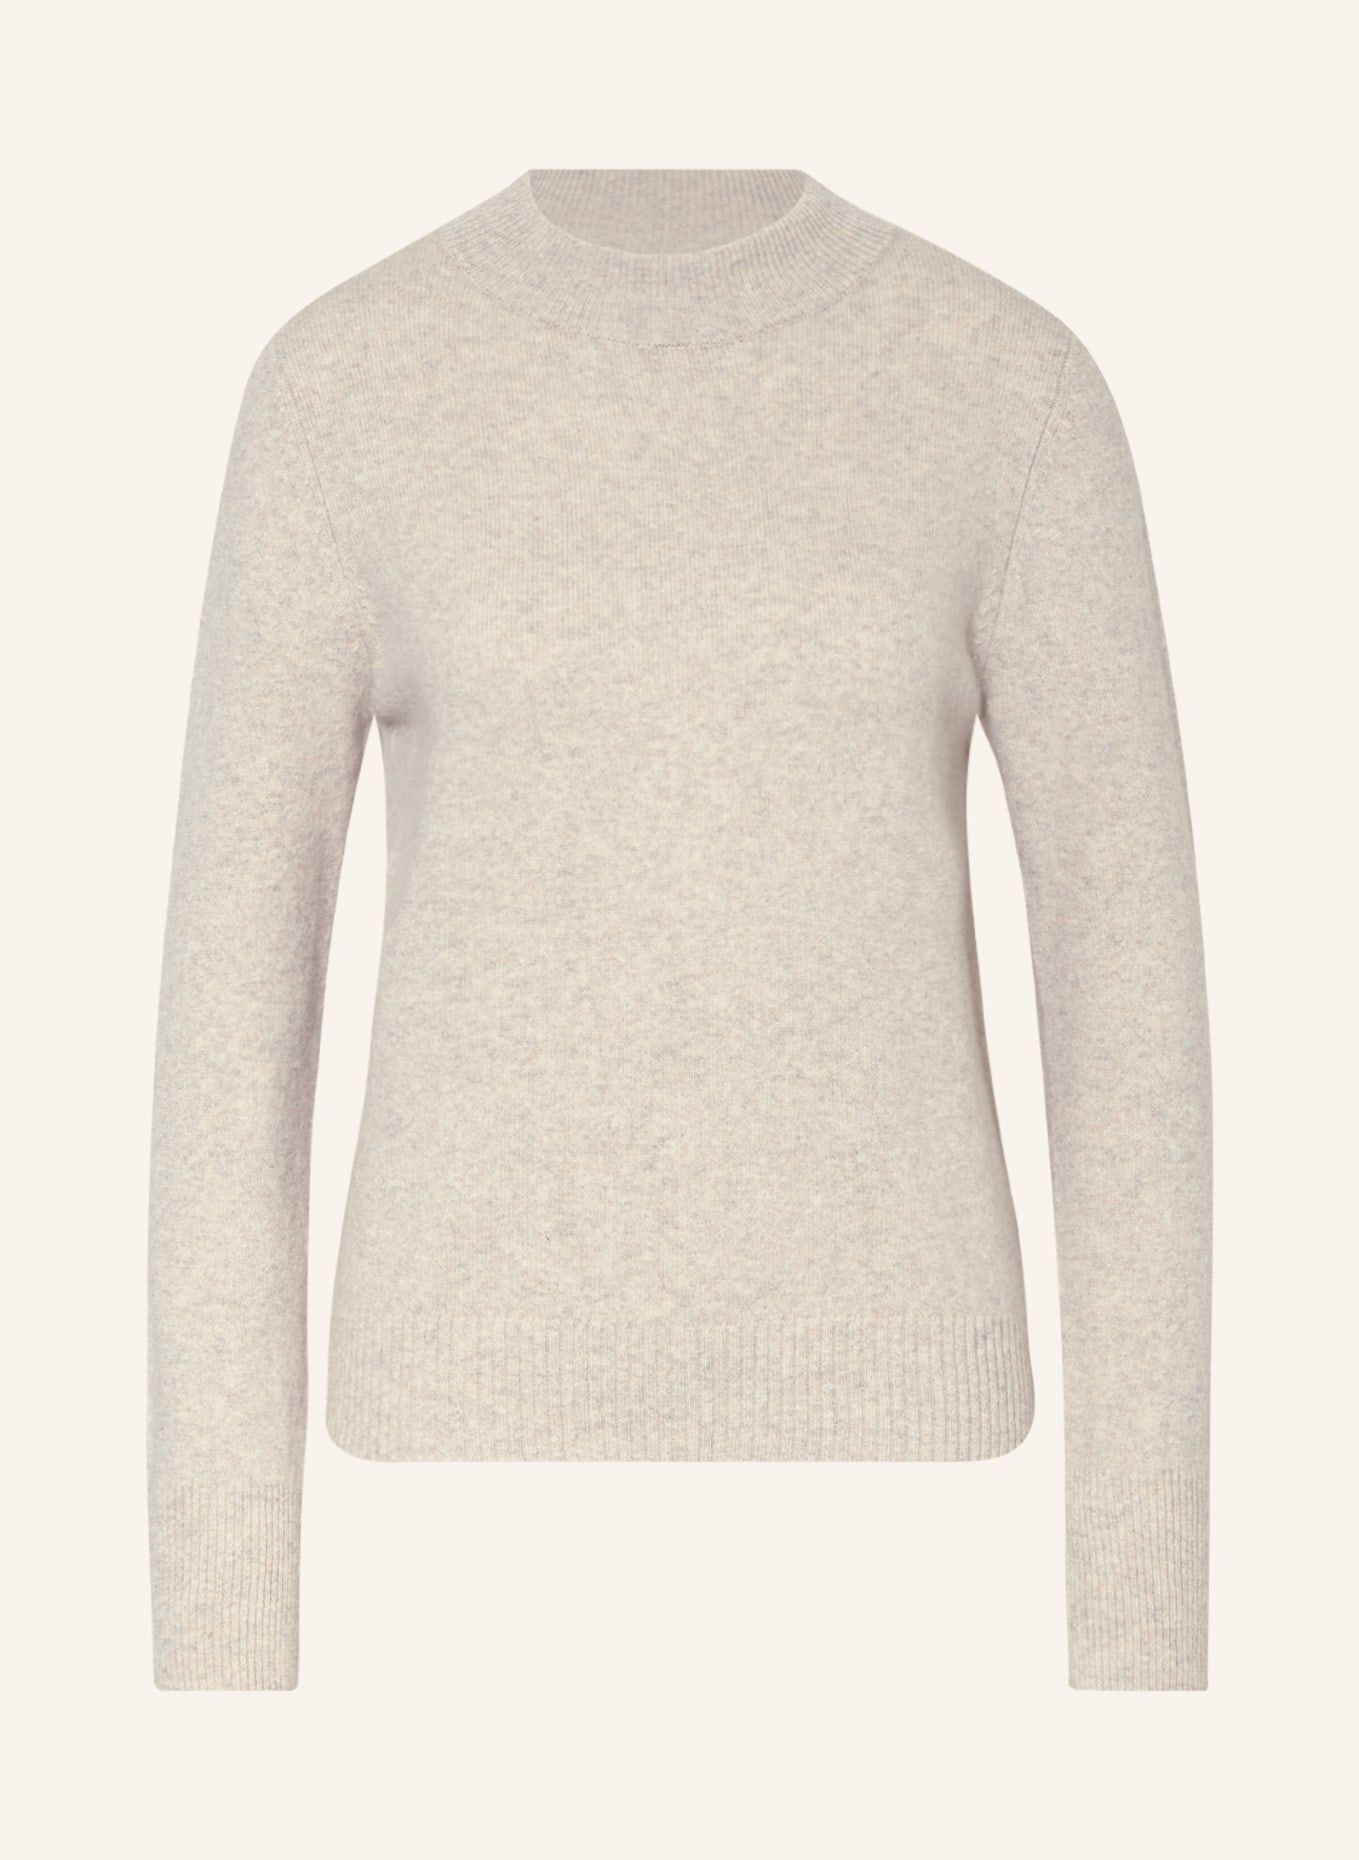 HEMISPHERE Cashmere-Pullover, Farbe: CREME (Bild 1)